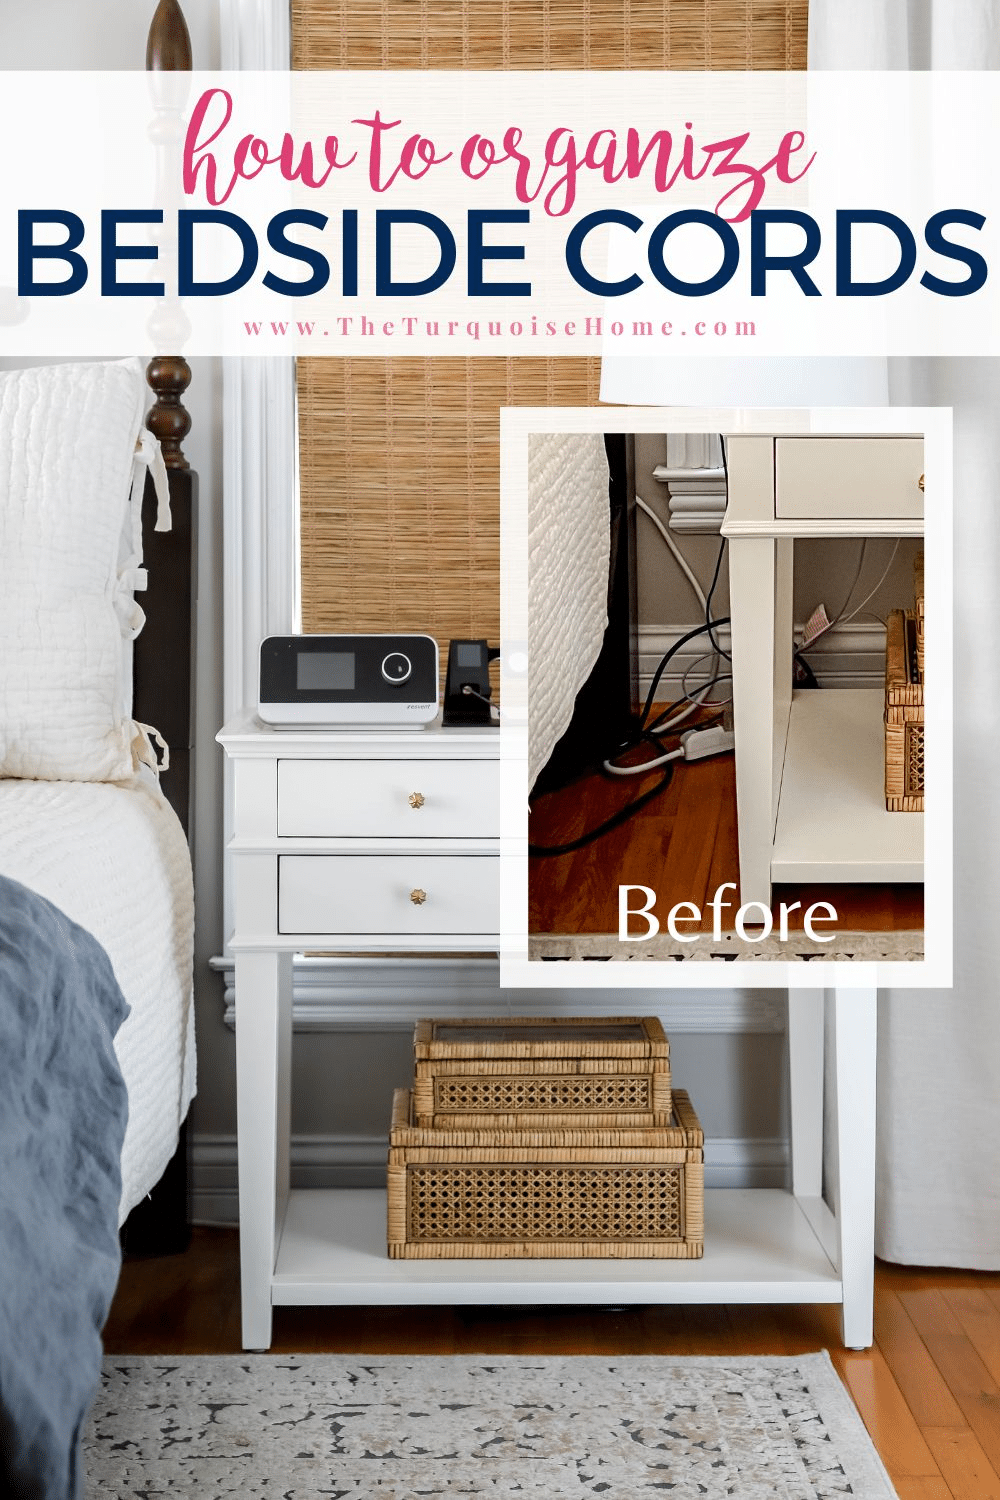 bedside cord organization ideas